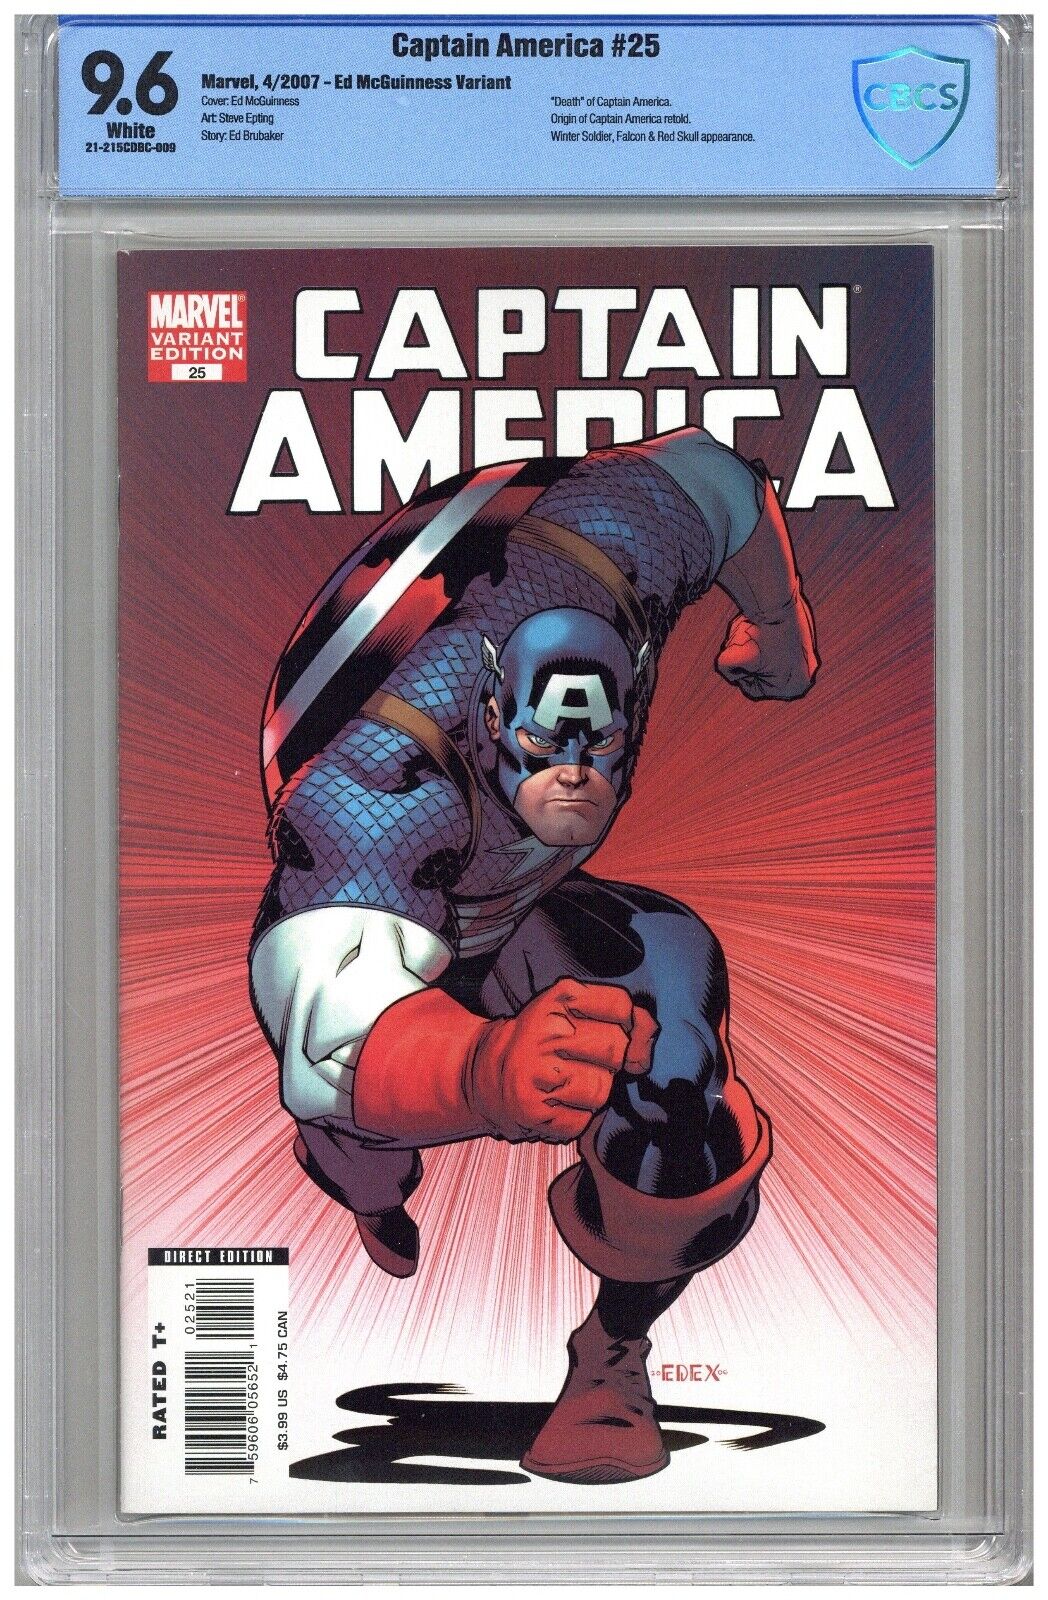 Captain America  #25  CBCS   9.6   NM+   White pgs  4/07  Ed McGuinness Variant Natychmiastowa dostawa wysyłkowa